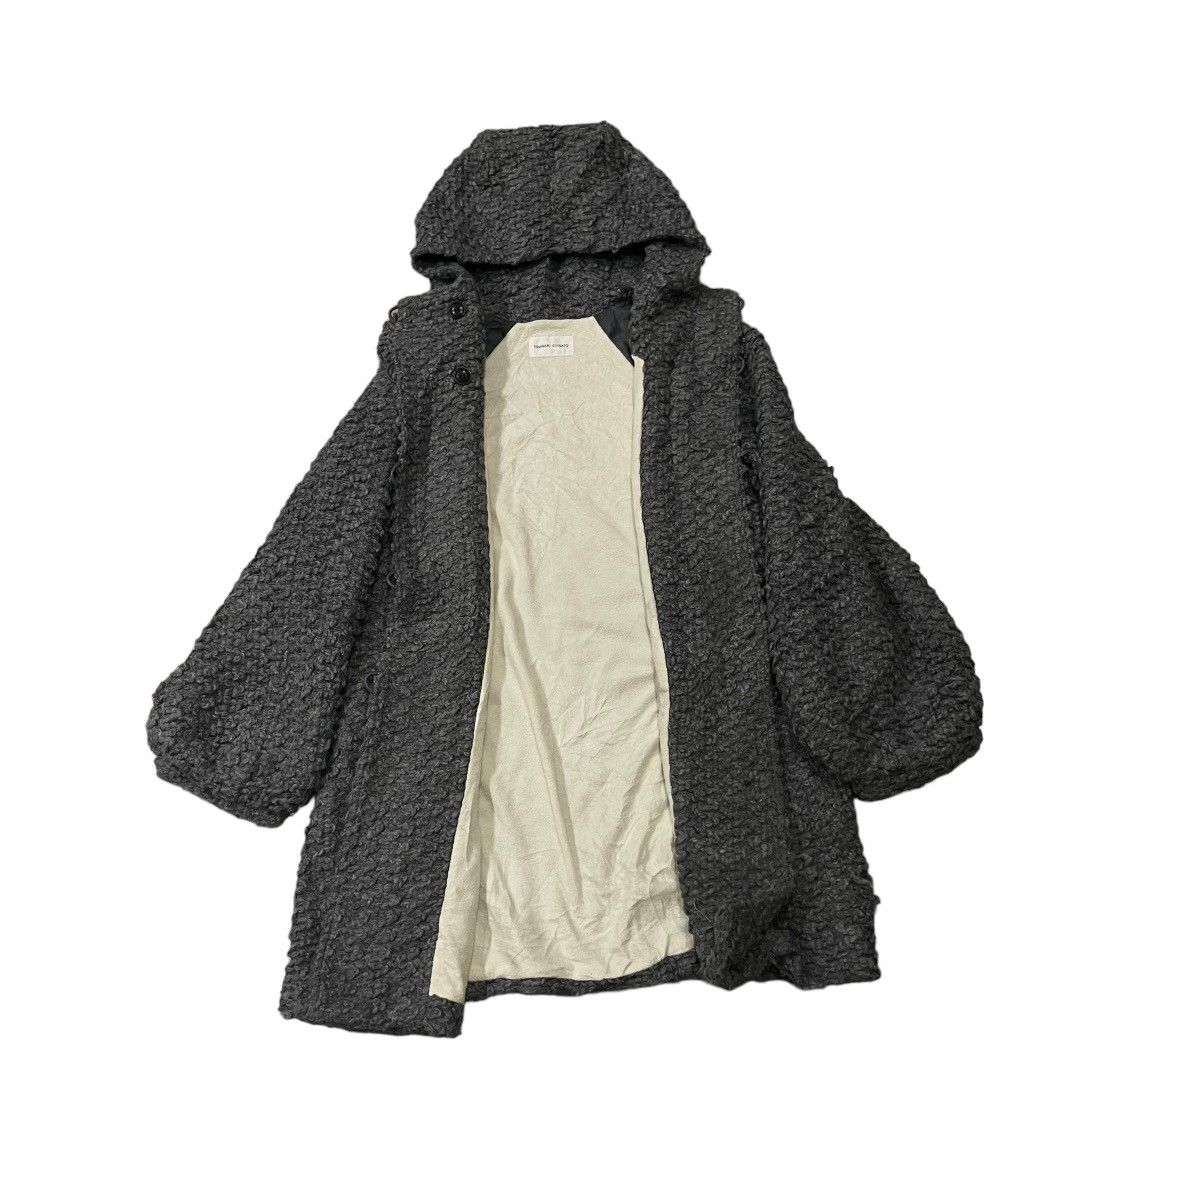 Issey Miyake Vintage Tsumori Chisato Issey Miyake Knitted Hooded Jacket Size M / US 6-8 / IT 42-44 - 19 Thumbnail